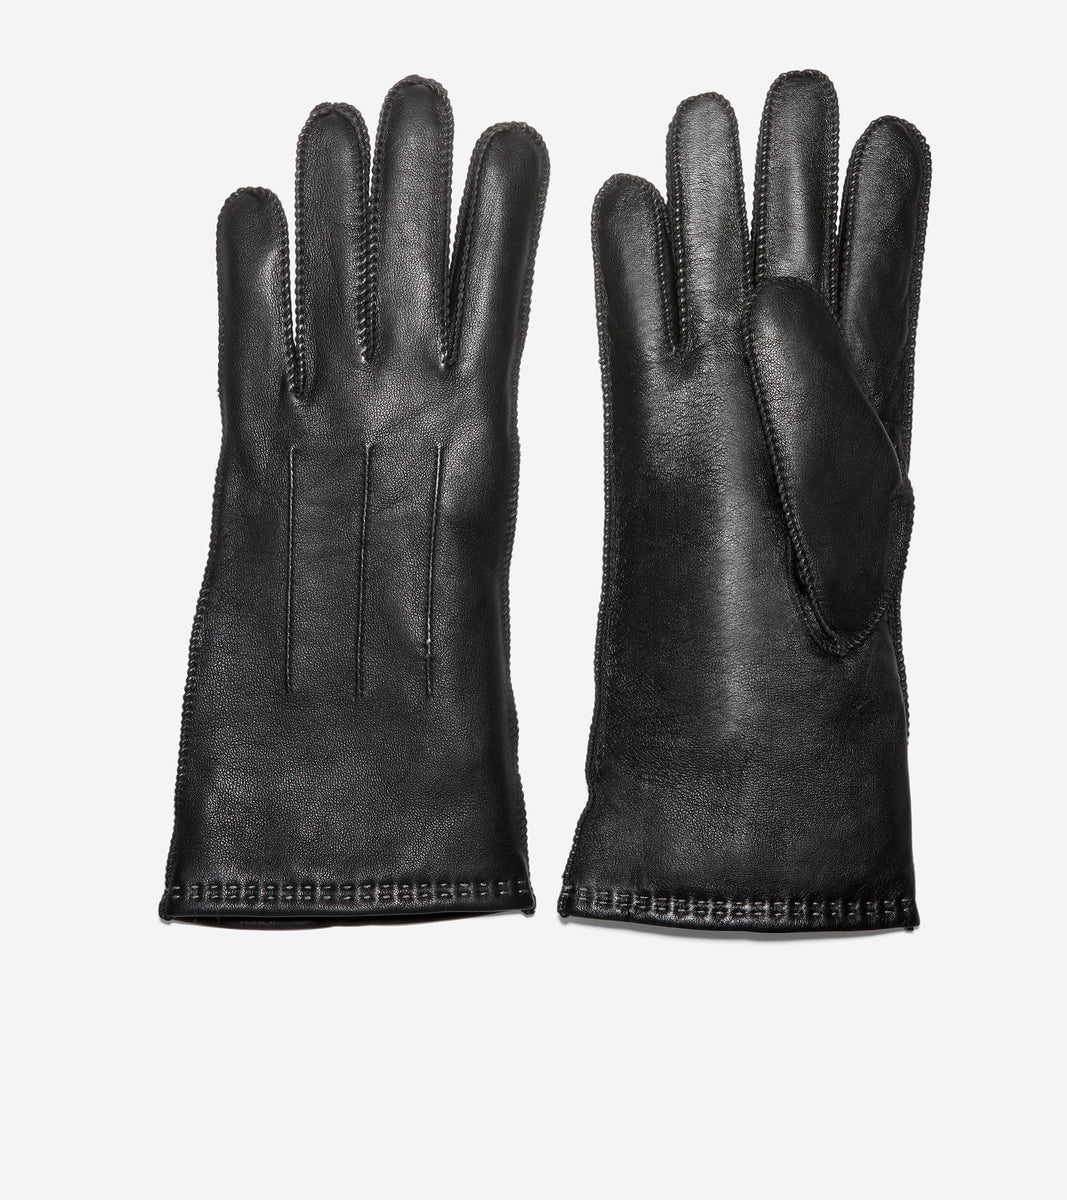 GRANDSERIES Leather Glove